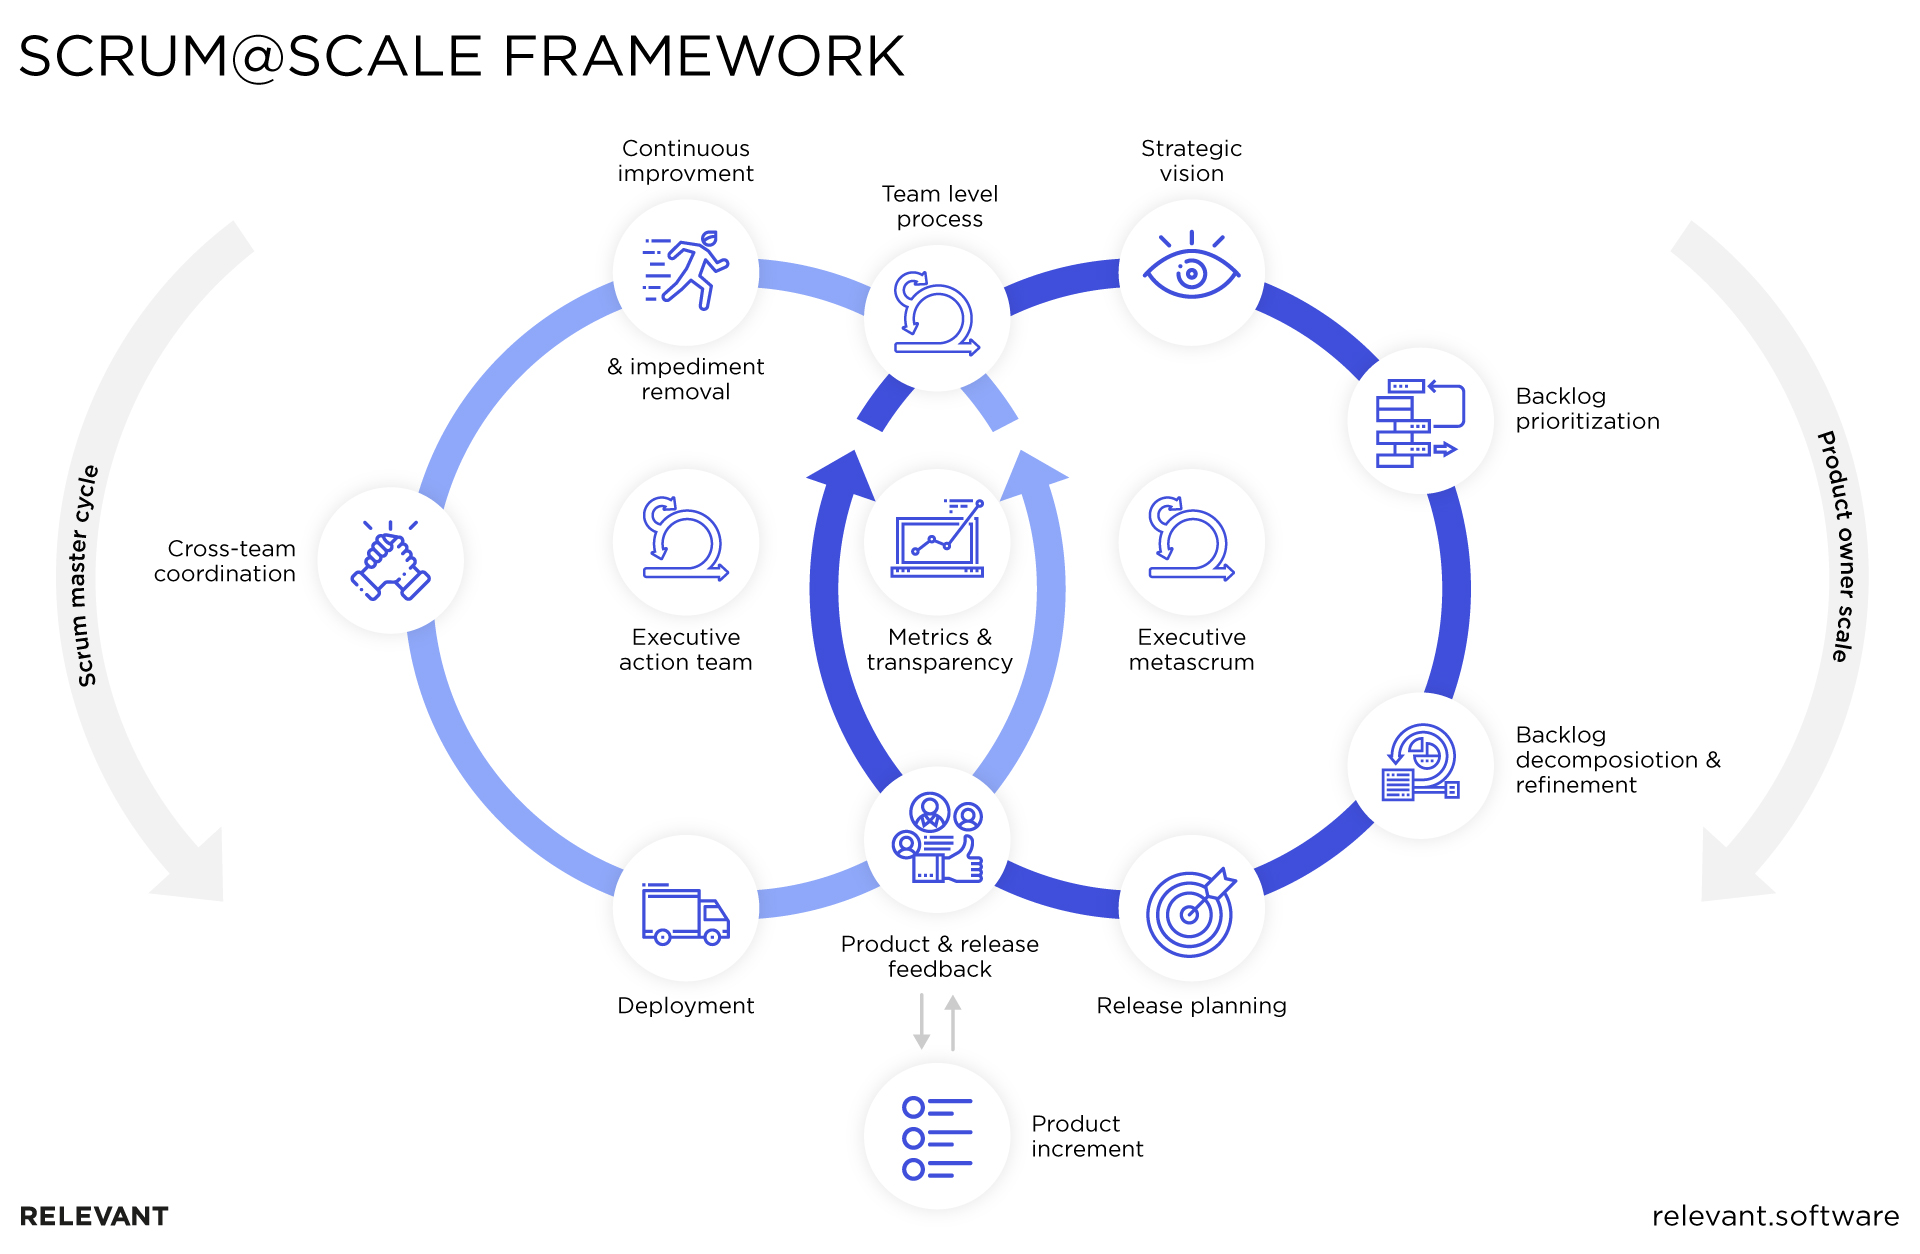 Scrum@Scale framework